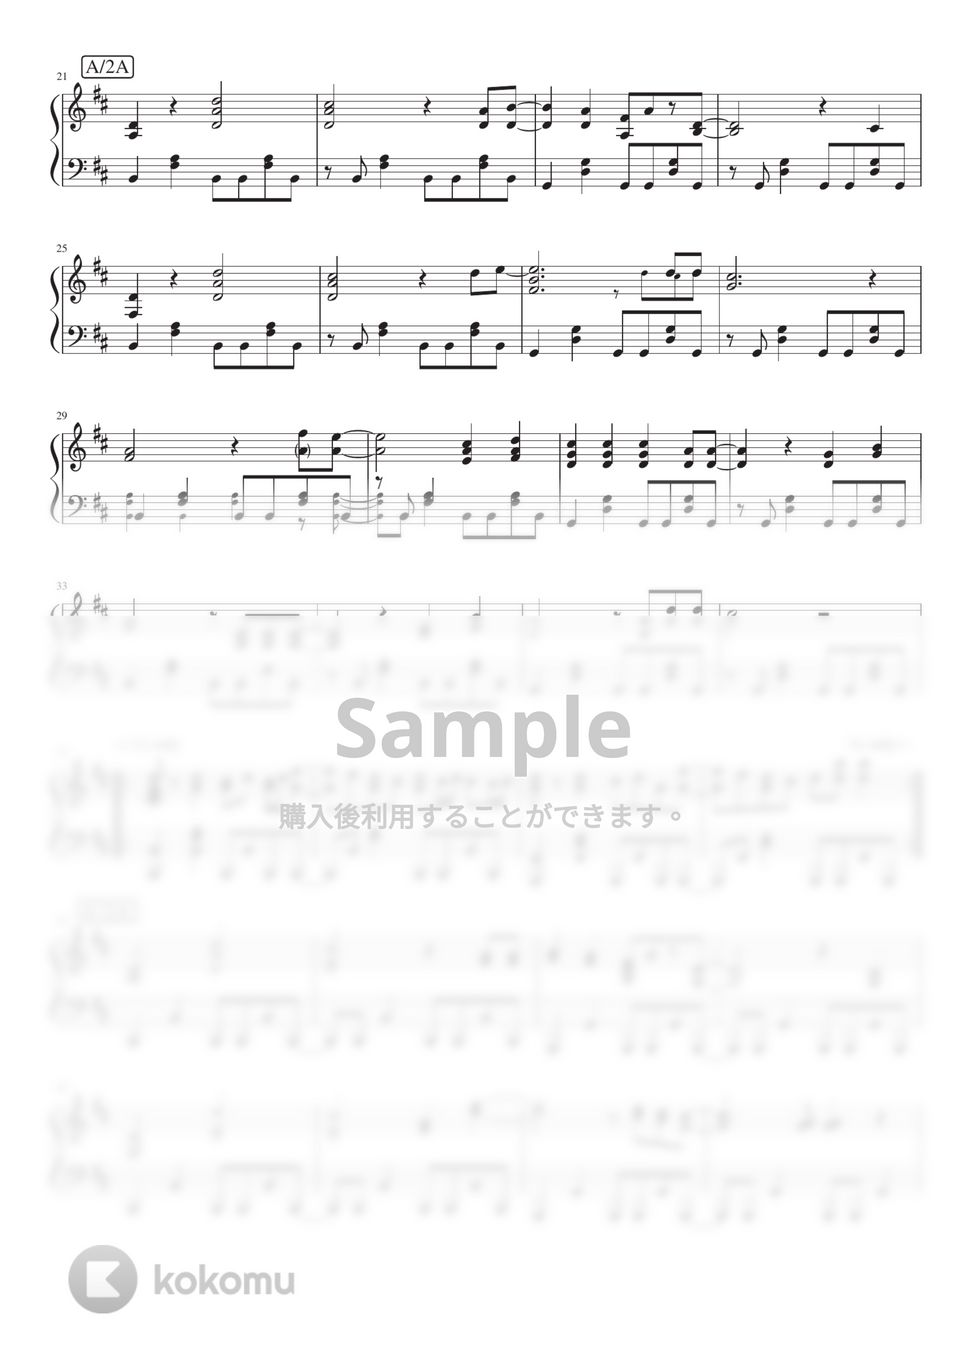 wowaka - ローリンガール (PianoSolo) by 深根 / Fukane